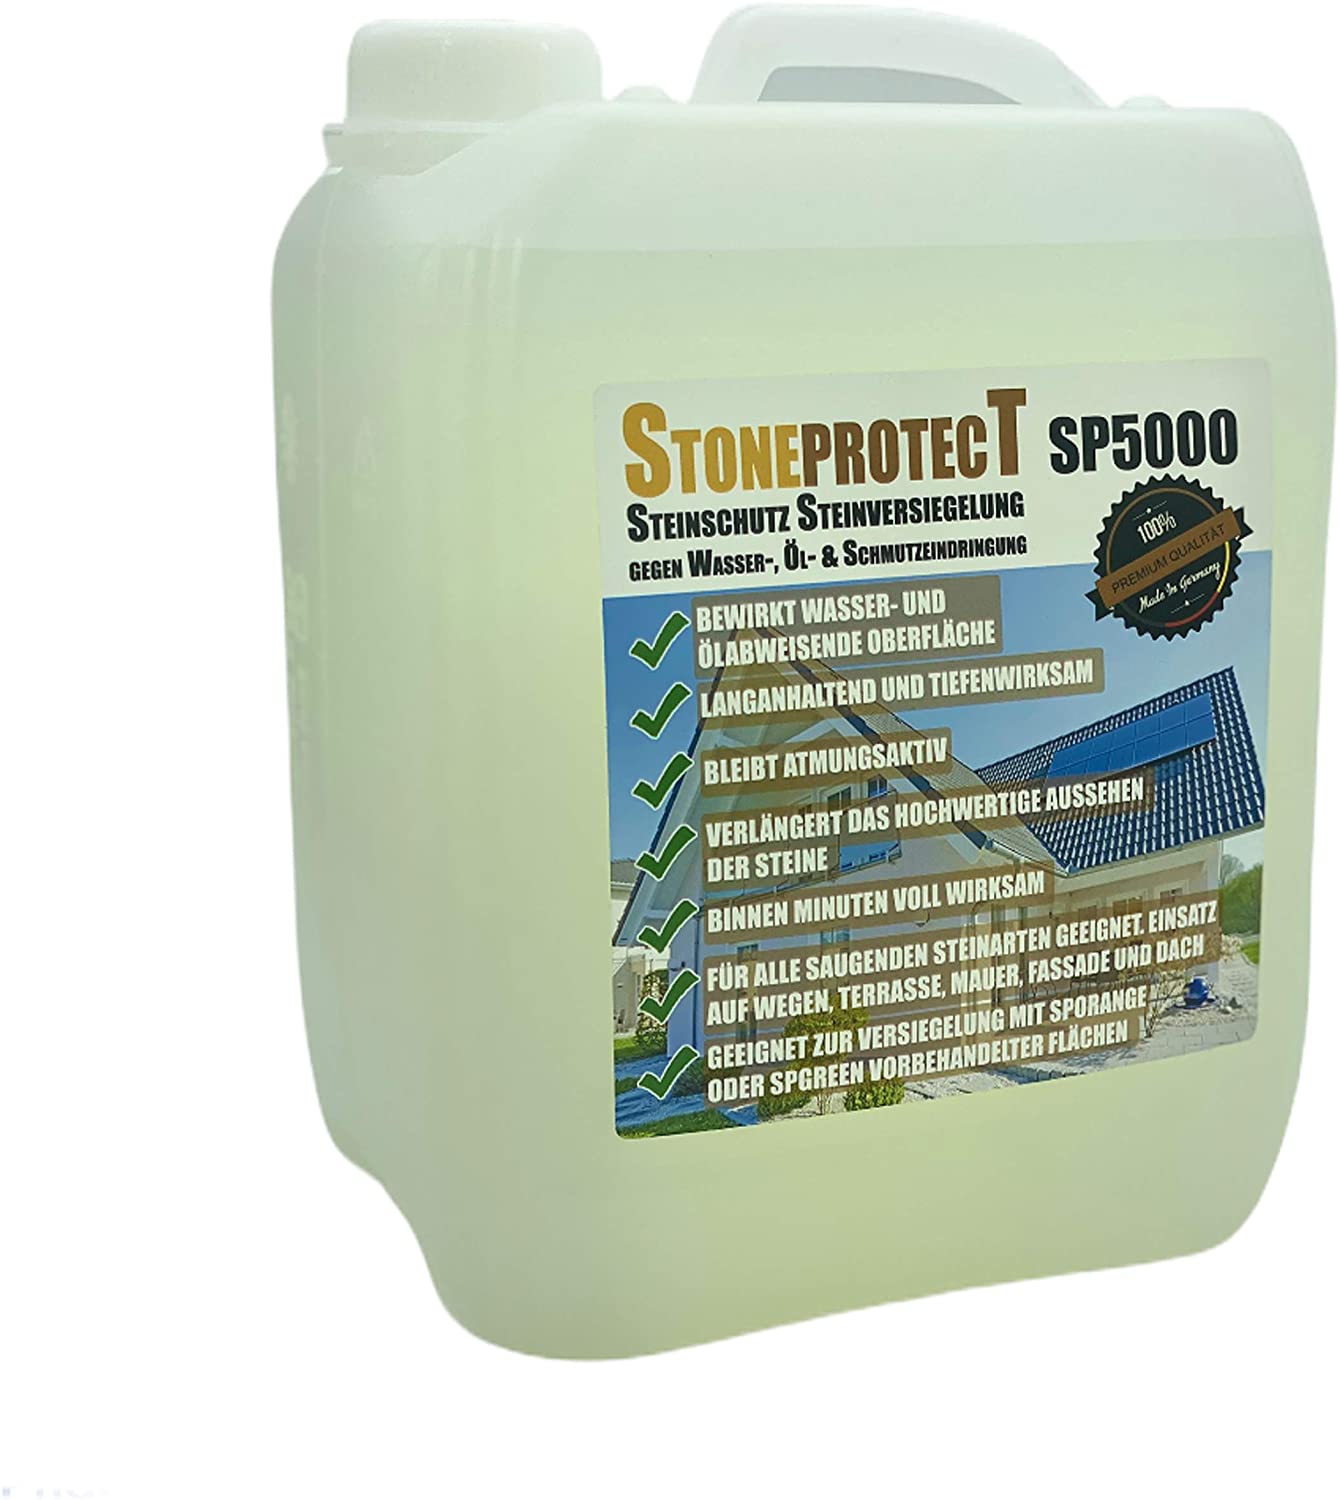 StoneprotecT SP5000